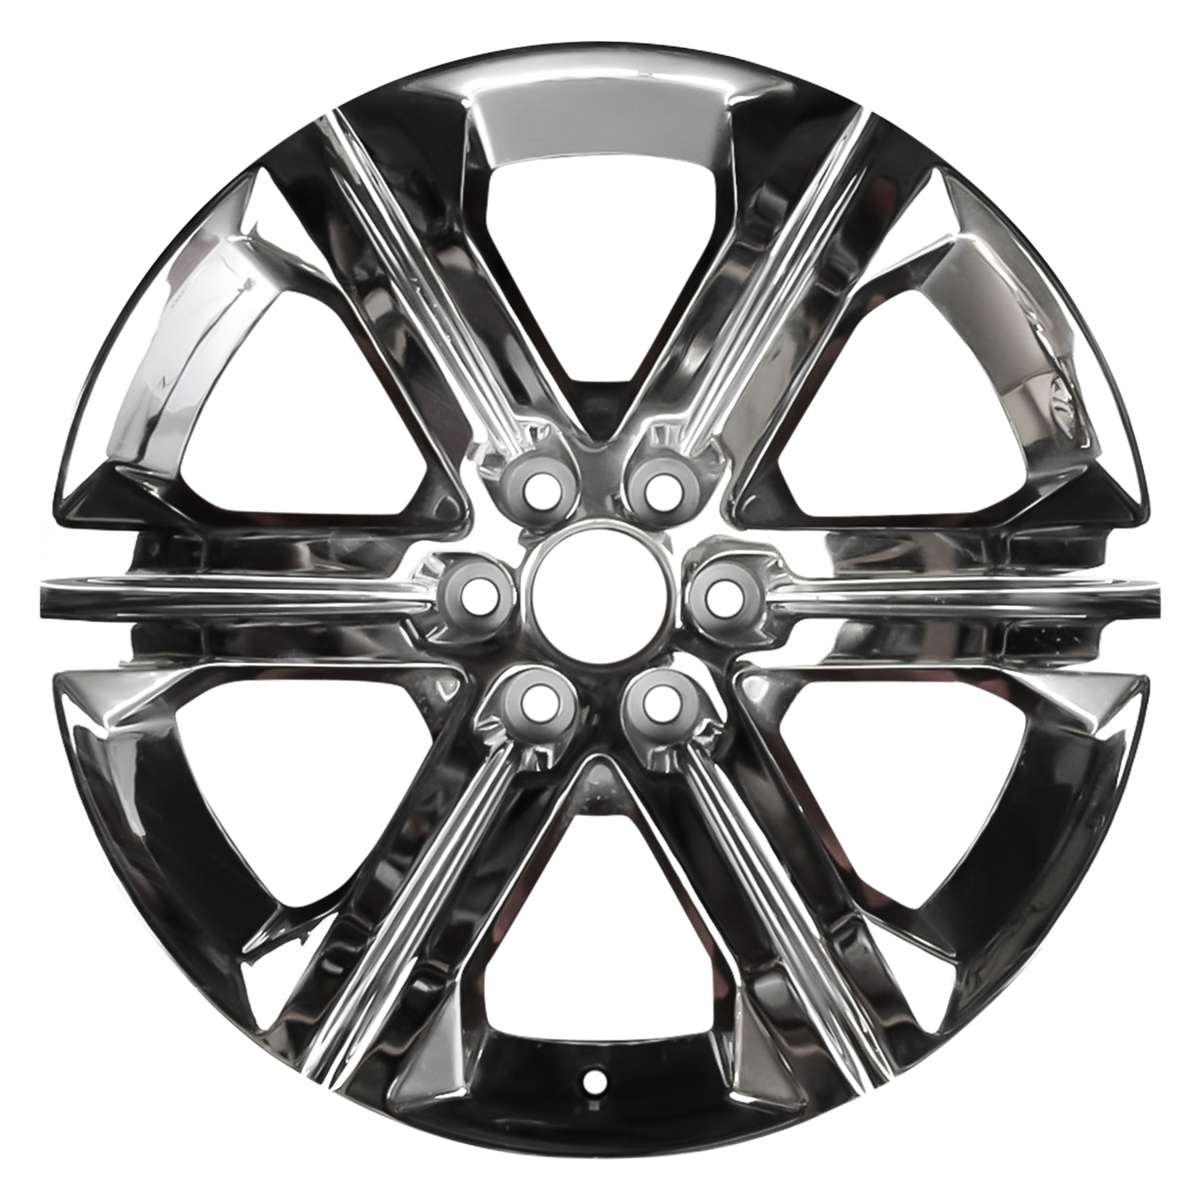 2014 Chevrolet Silverado 1500 New 22" Replacement Wheel Rim RW5667CHR